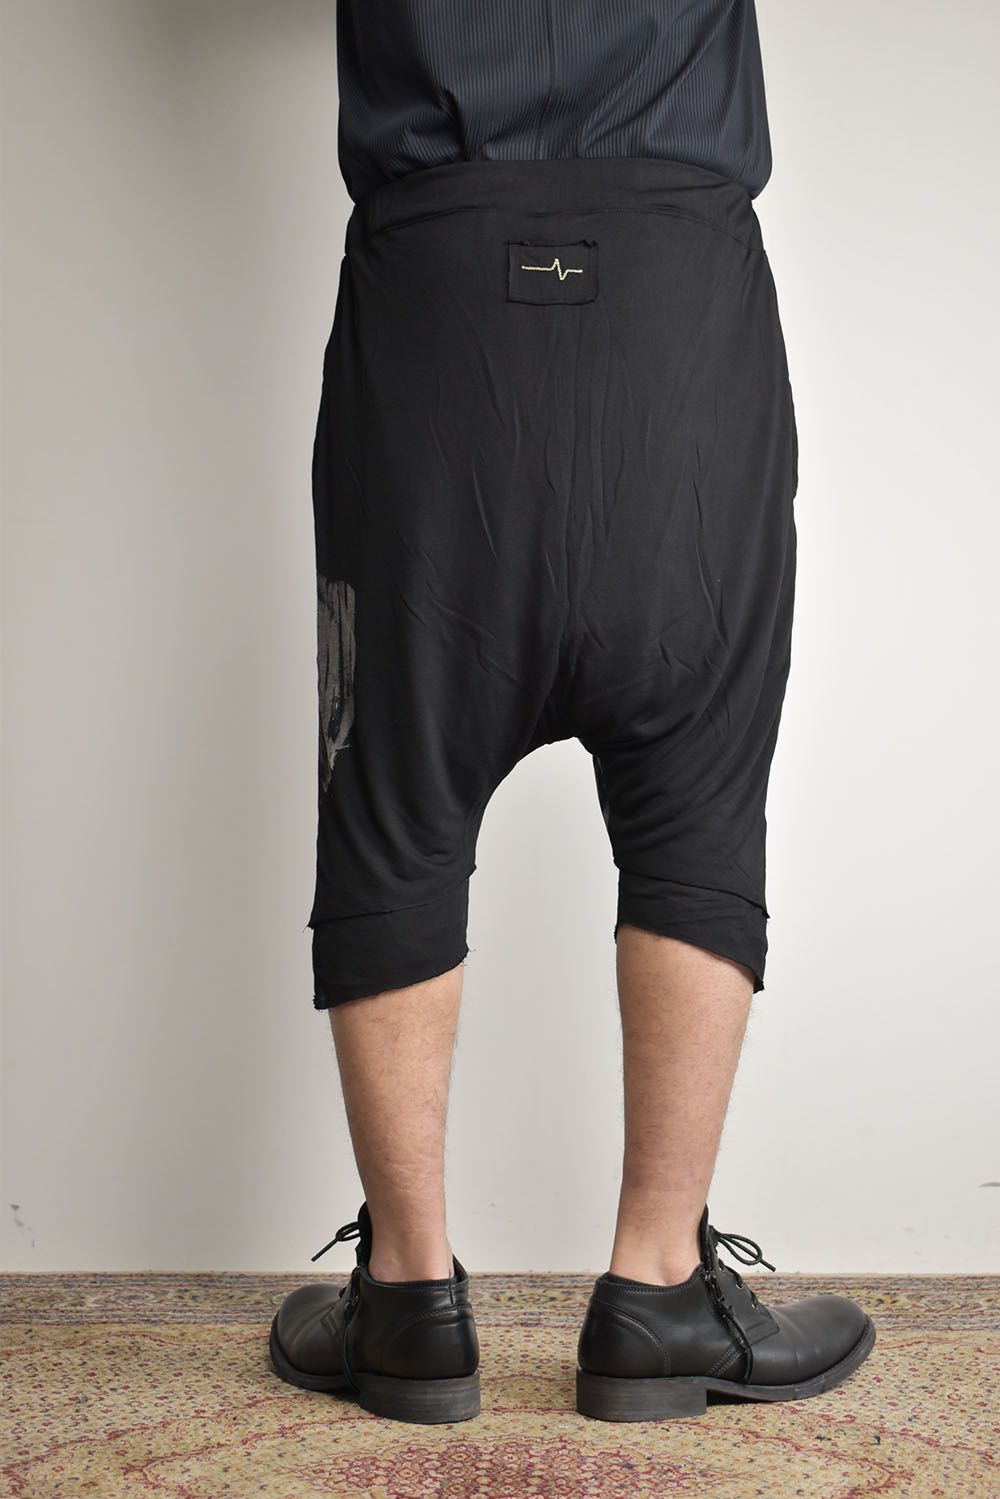 Print Sarrouel Shorts"Black"/プリントサルエルショーツ"ブラック"